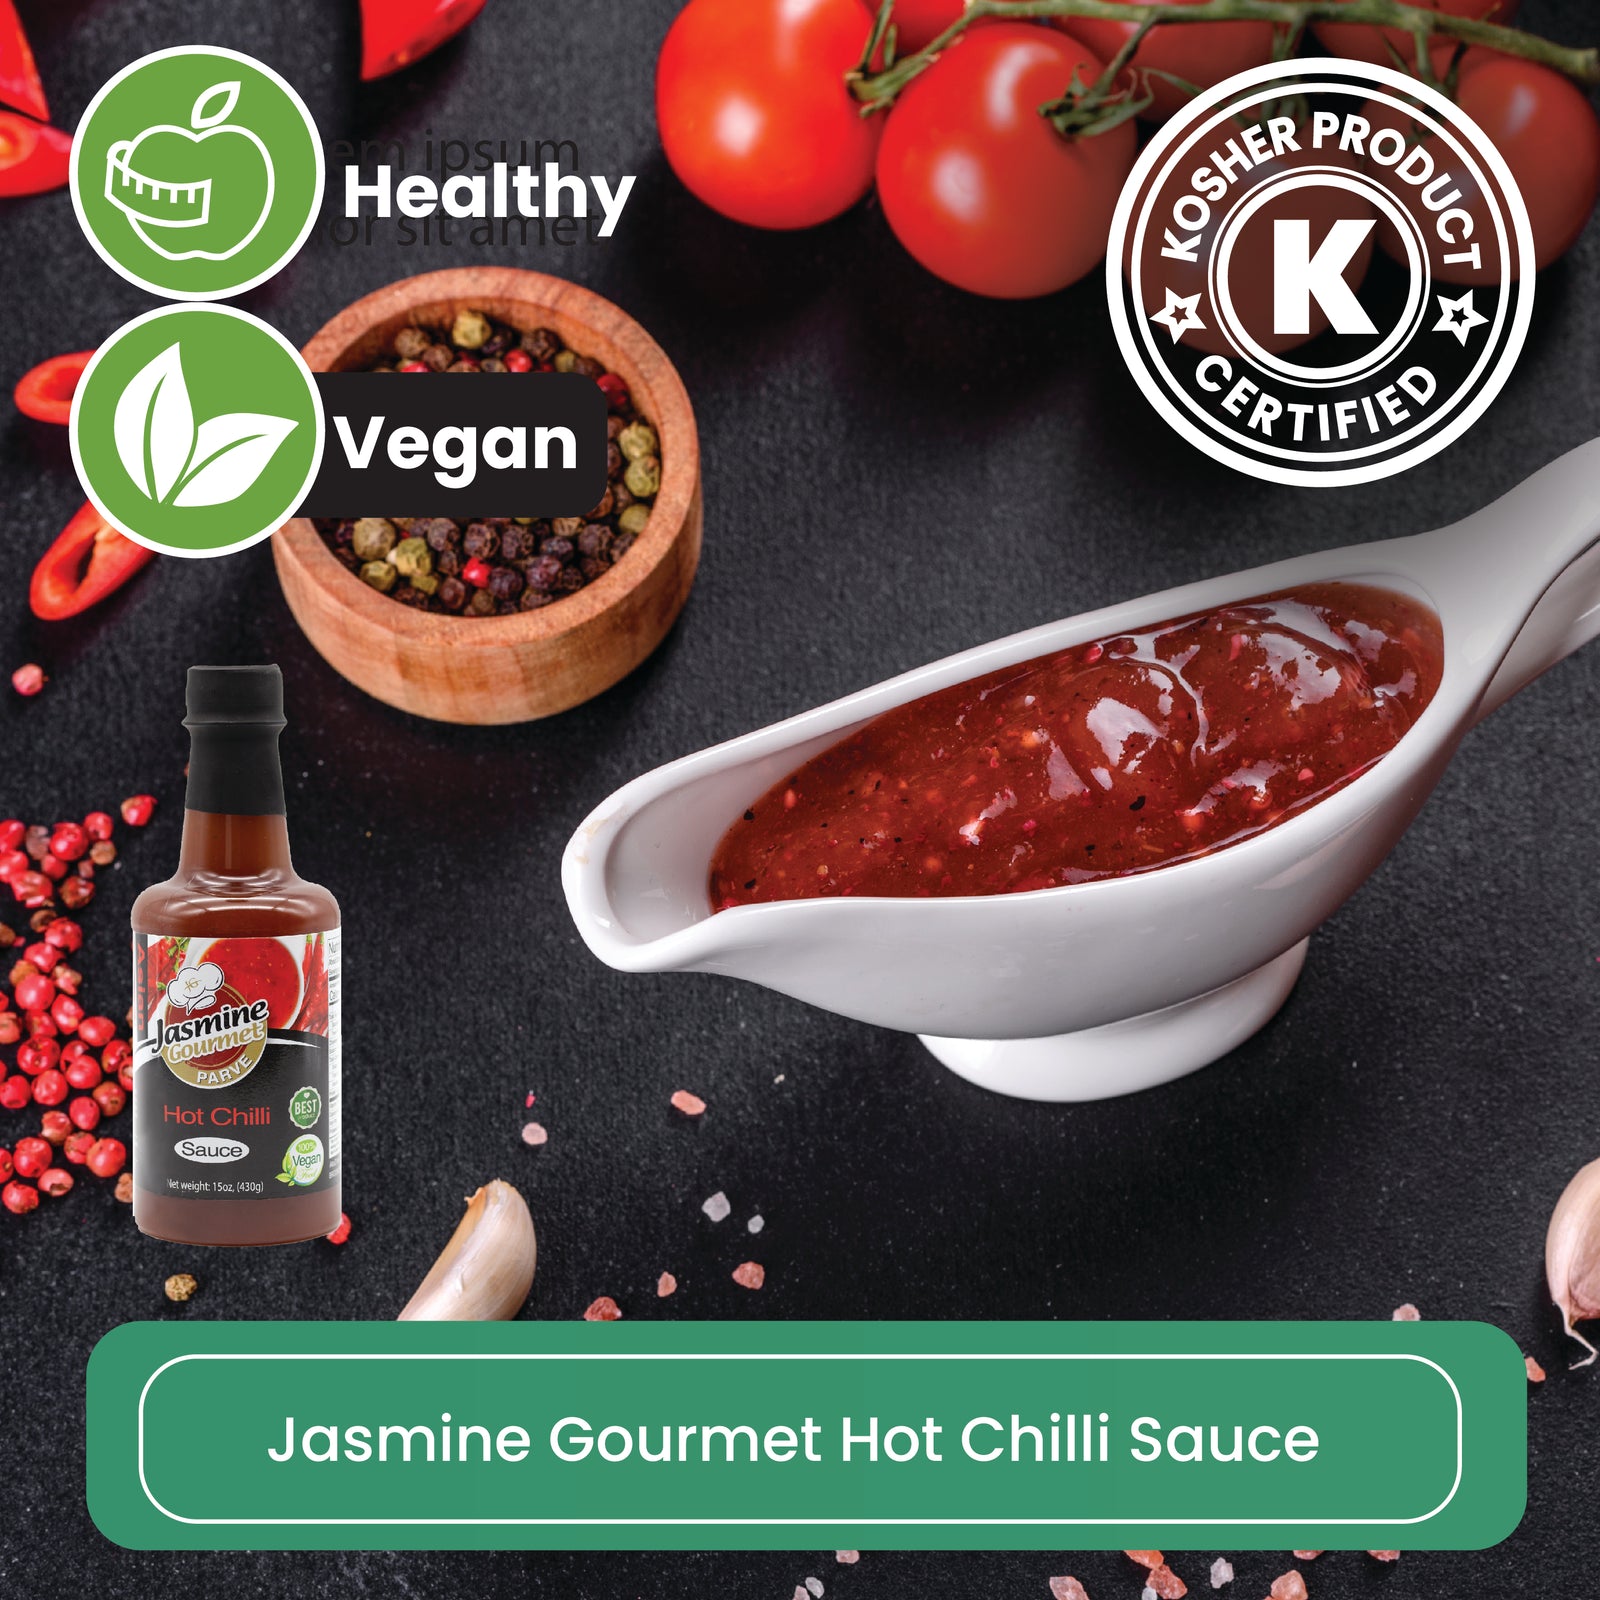 Jasmine Gourmet Hot Chilli Sauce